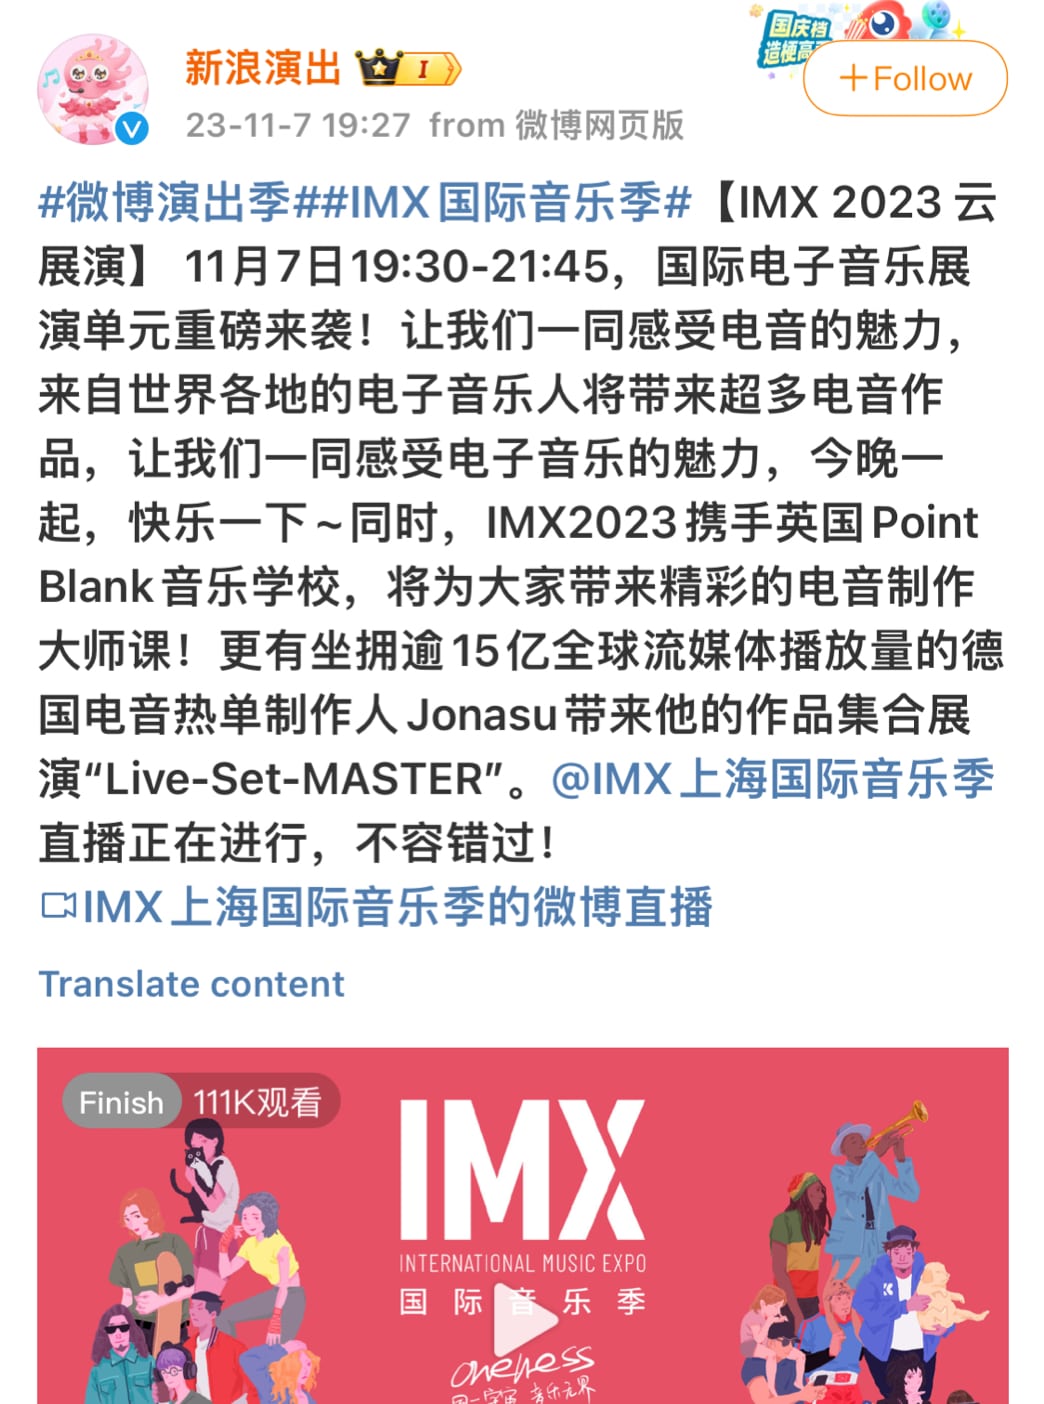 IMX 2023 Media Response - 11